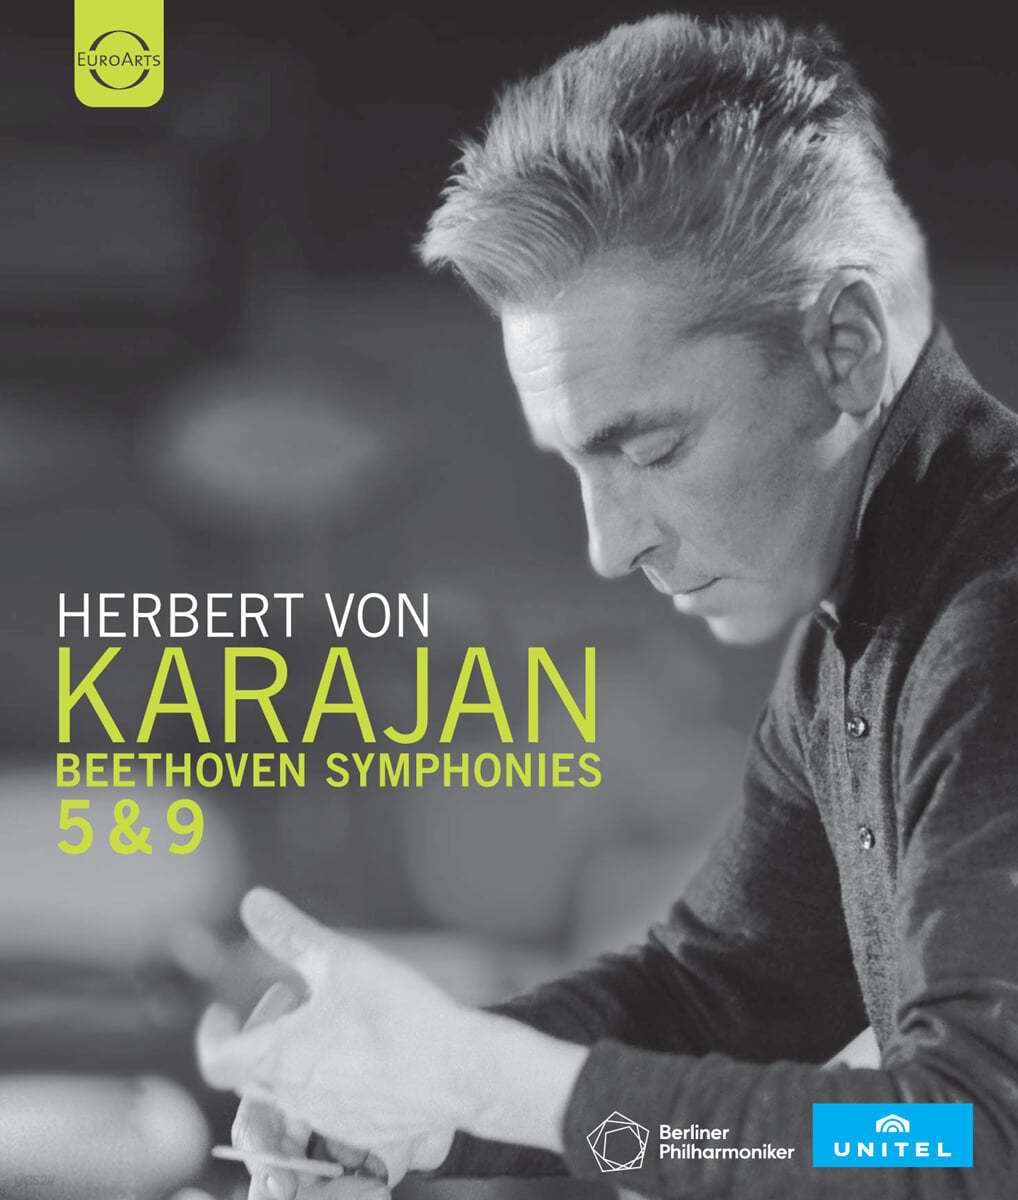 Herbert von Karajan 베토벤: 교향곡 5번 9번 ‘합창’ - 헤르베르트 폰 카라얀 (Beethoven: Symphonies 5 & 9) 